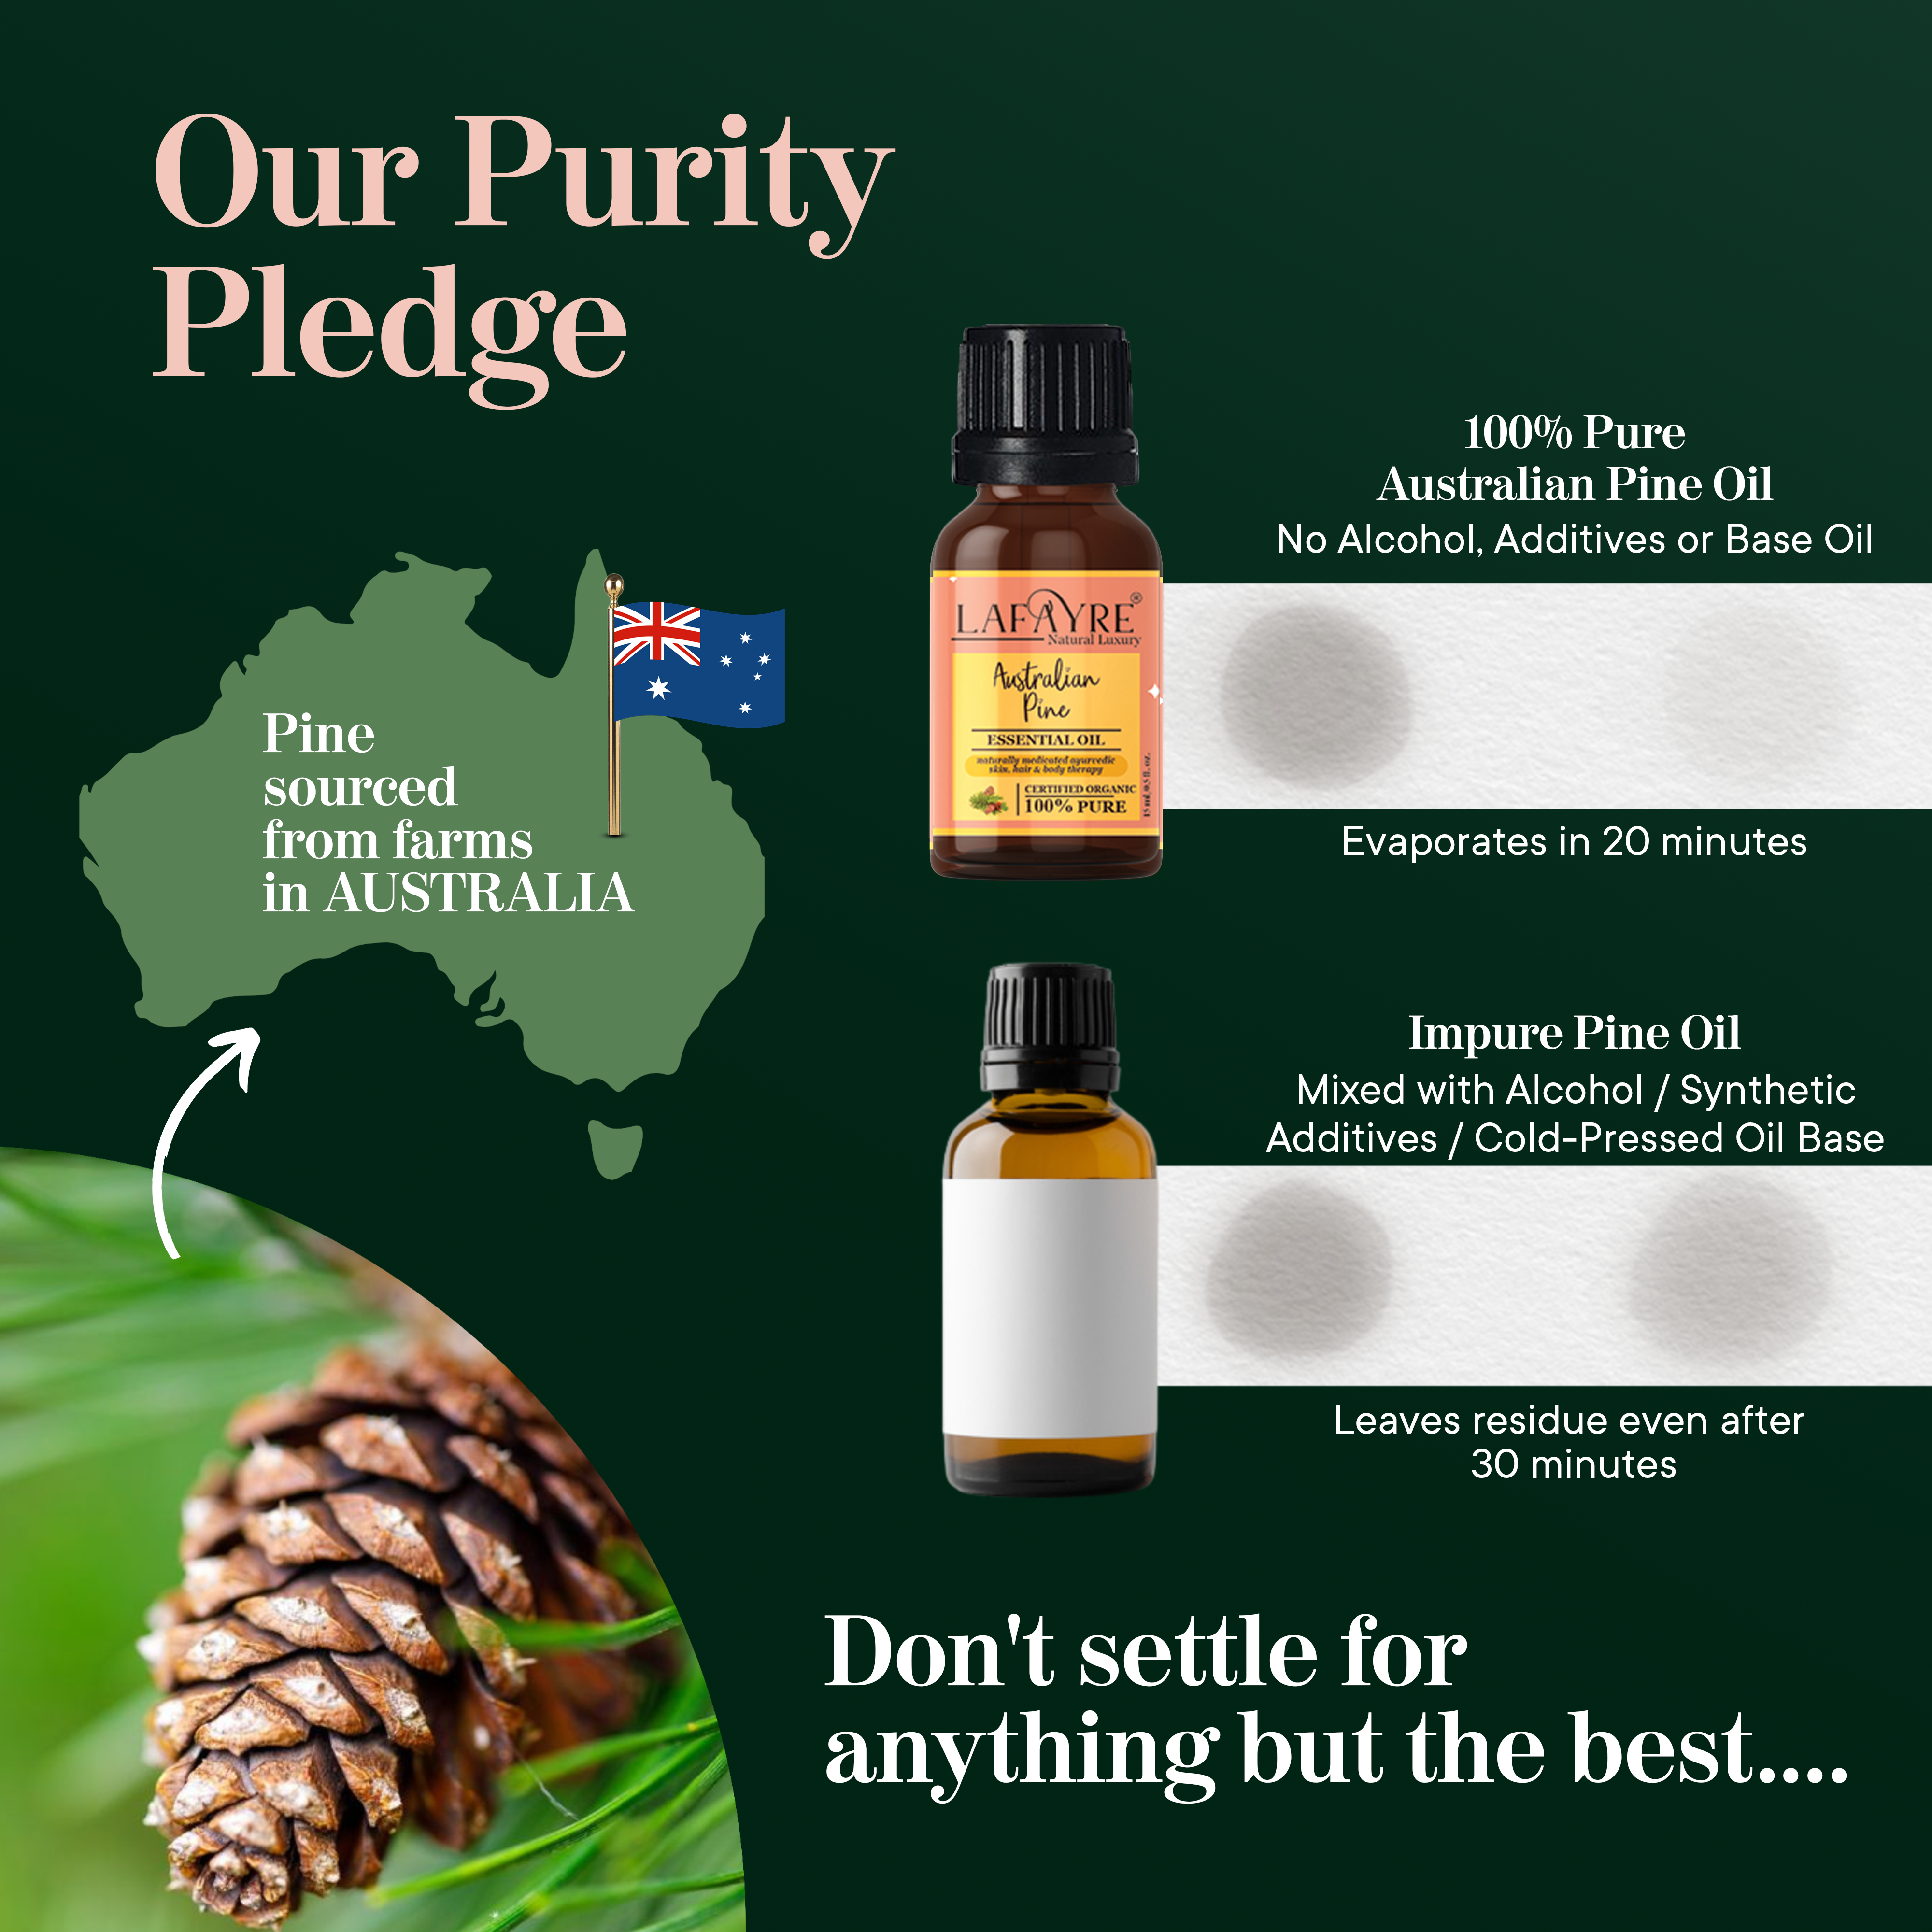 Australian Pine Oil pledge